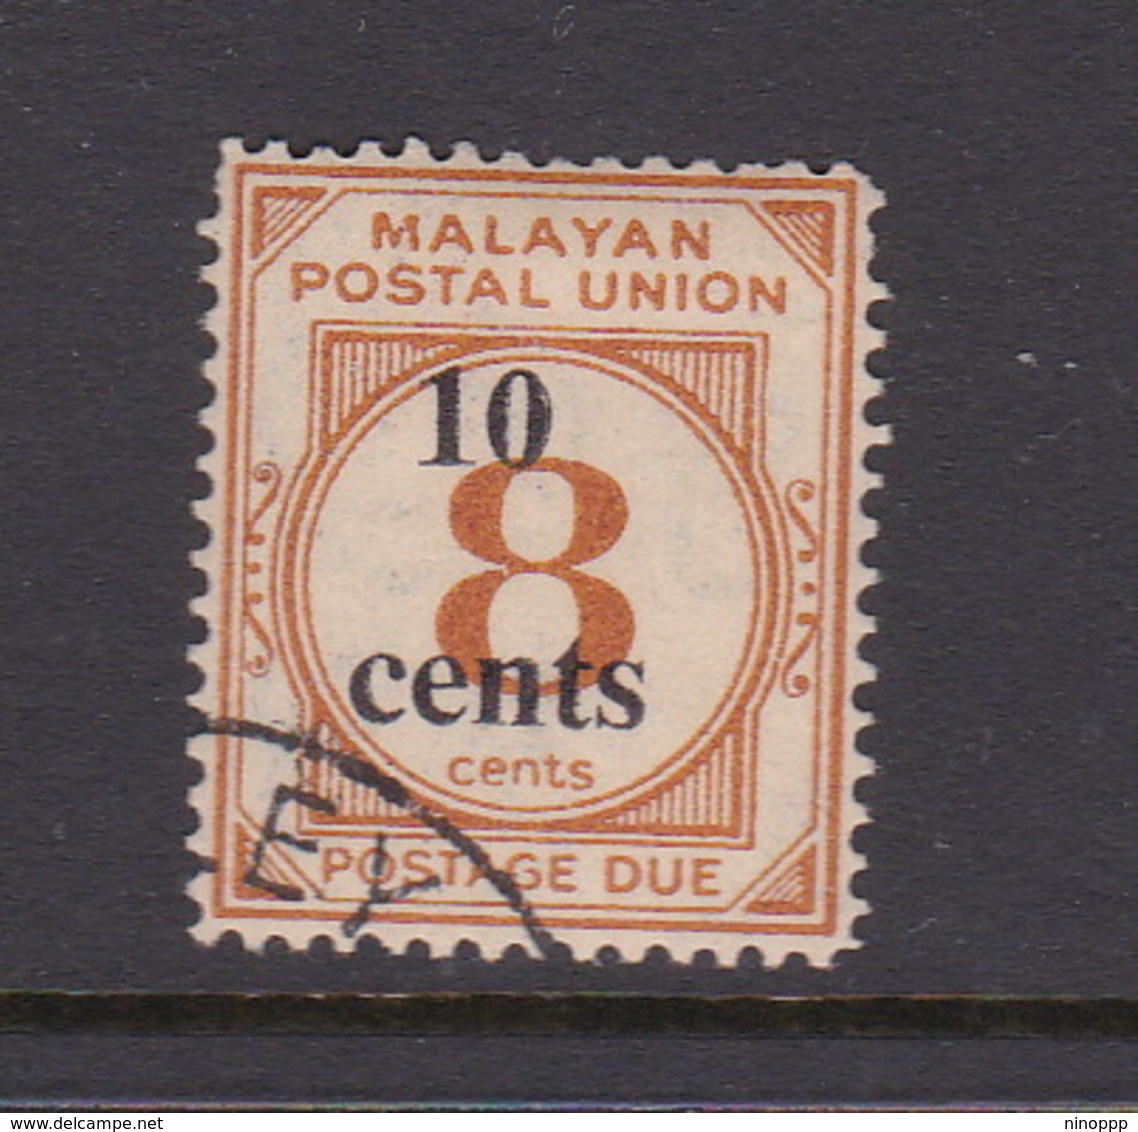 Malayan Postal Union D29 1964 Postage Due 10 Cents On 8c Yellow-orange,used - Malaya (British Military Administration)